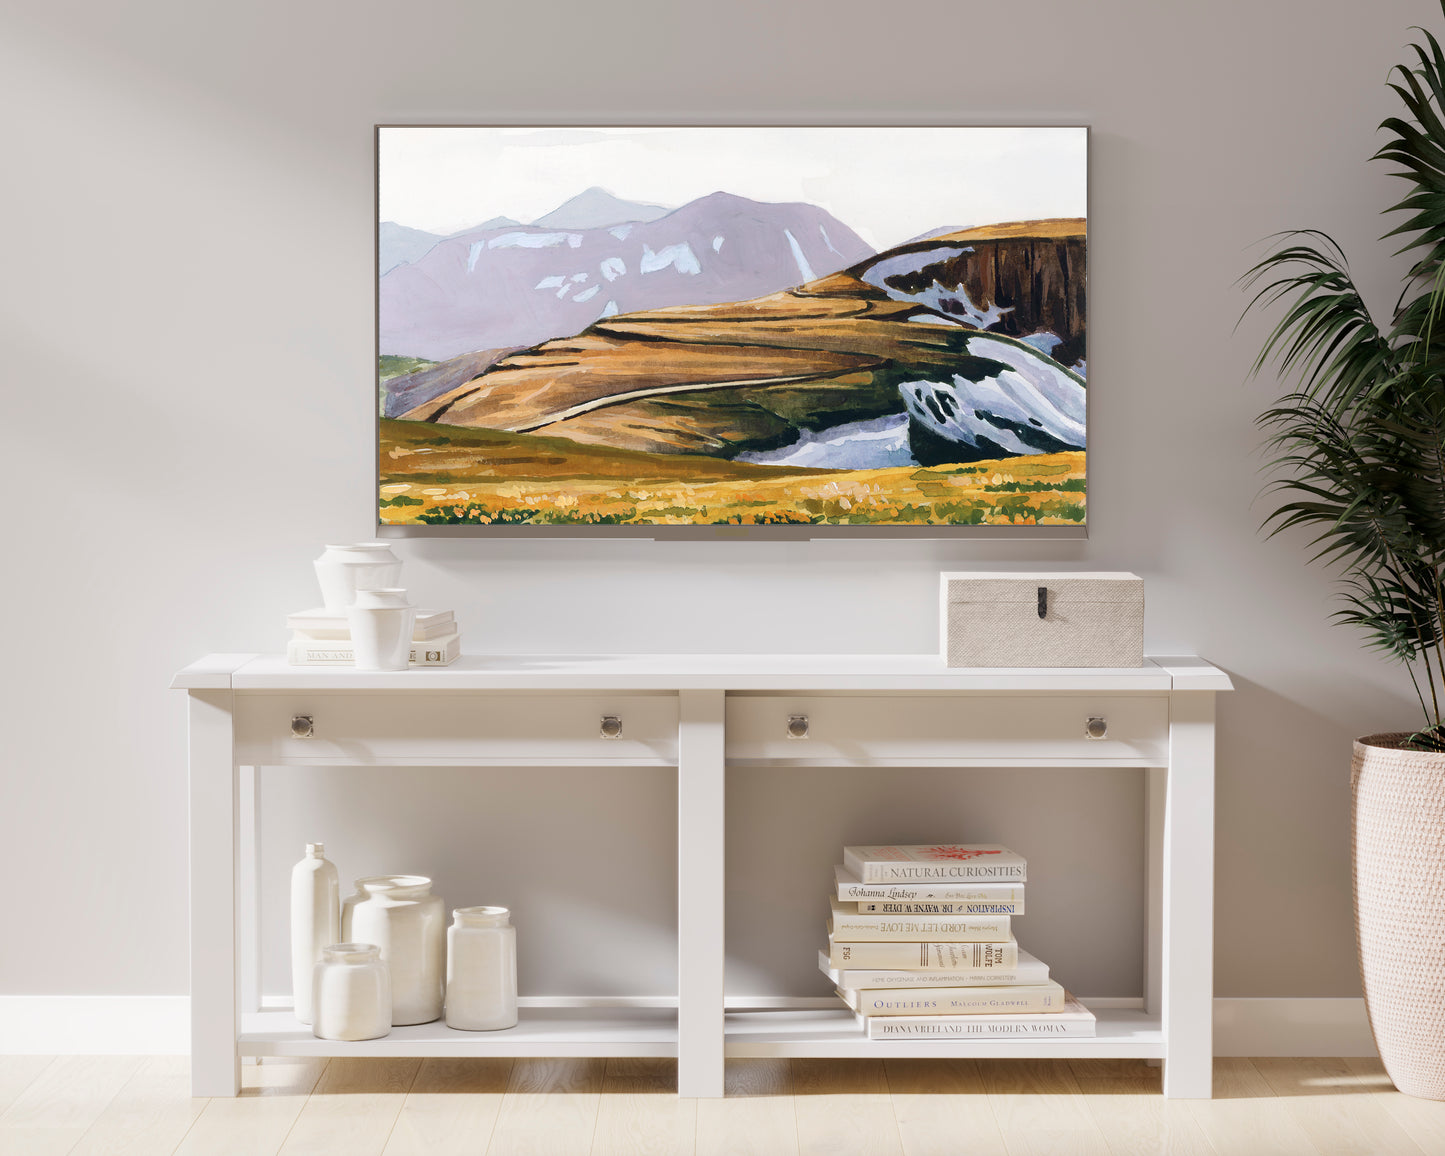 Rocky Mountain National Park - digital download for Samsung TV Frame